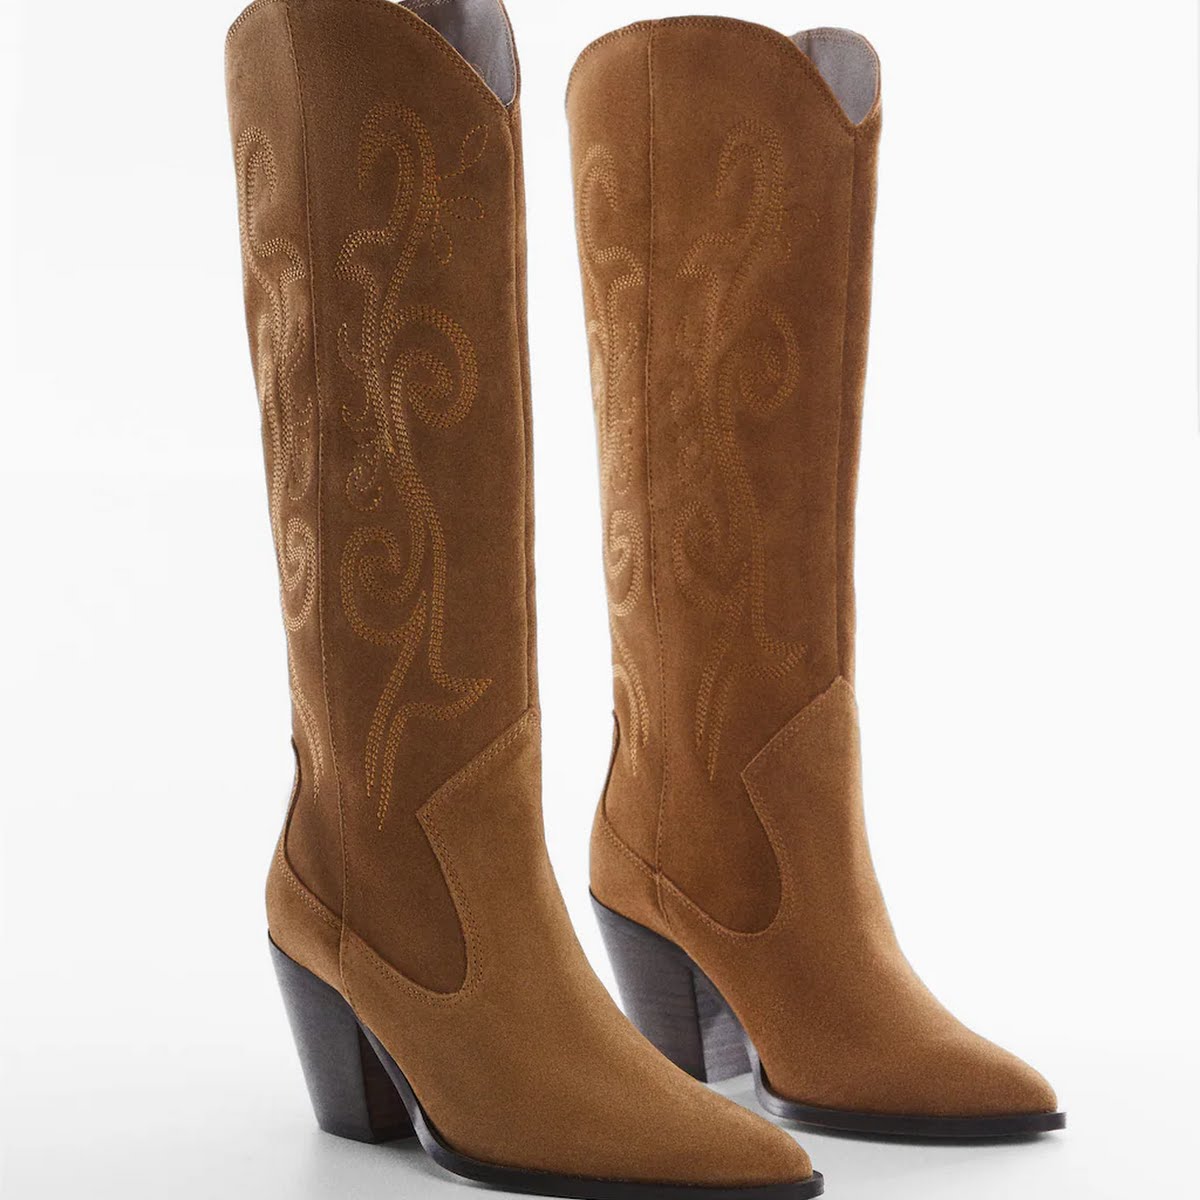 Cowboy Leather Boots, €99.99, Mango